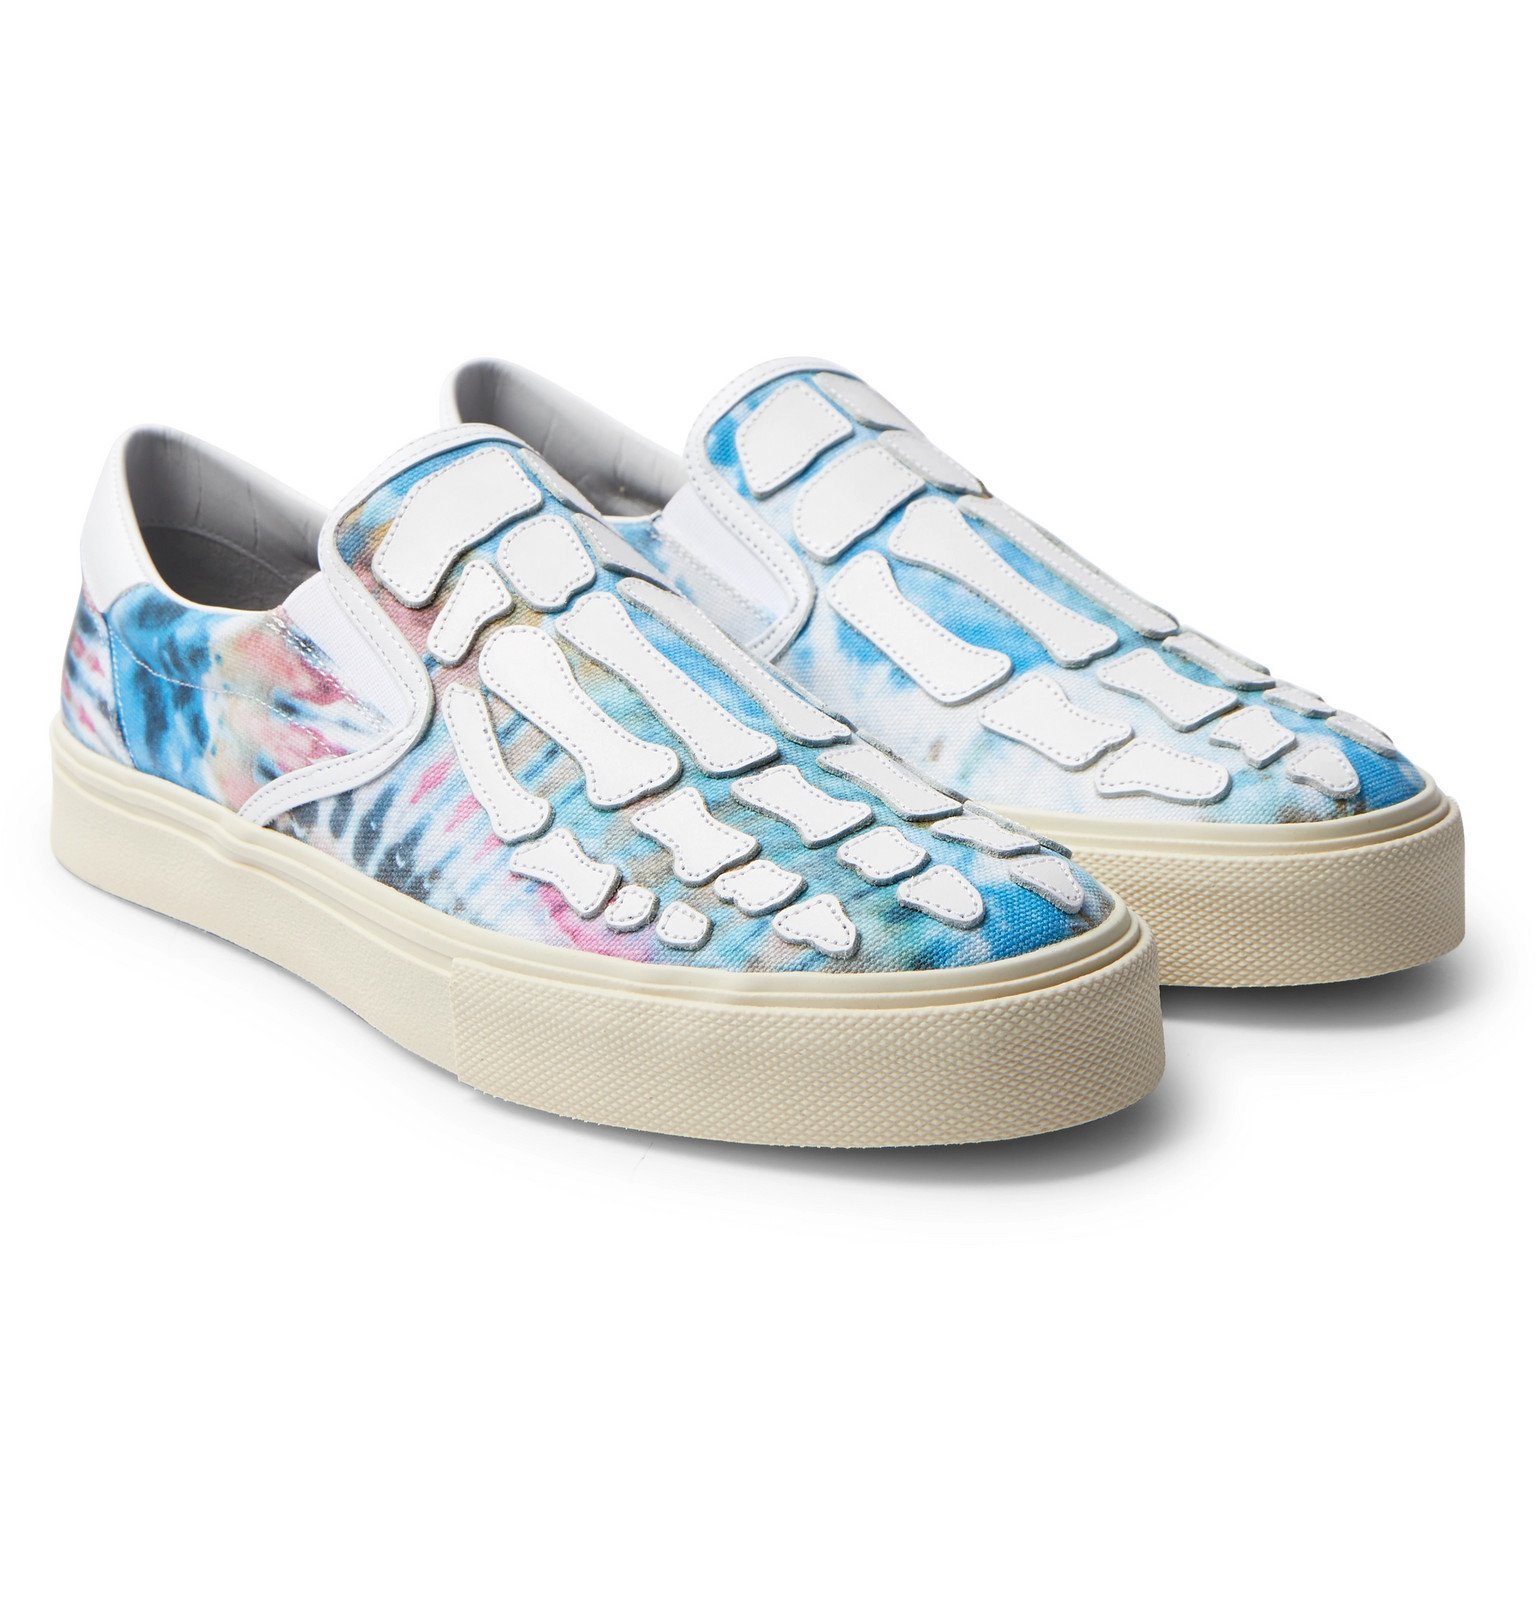 AMIRI - Skel-Toe Tie-Dye Canvas and Leather Slip-On Sneakers - Blue Amiri